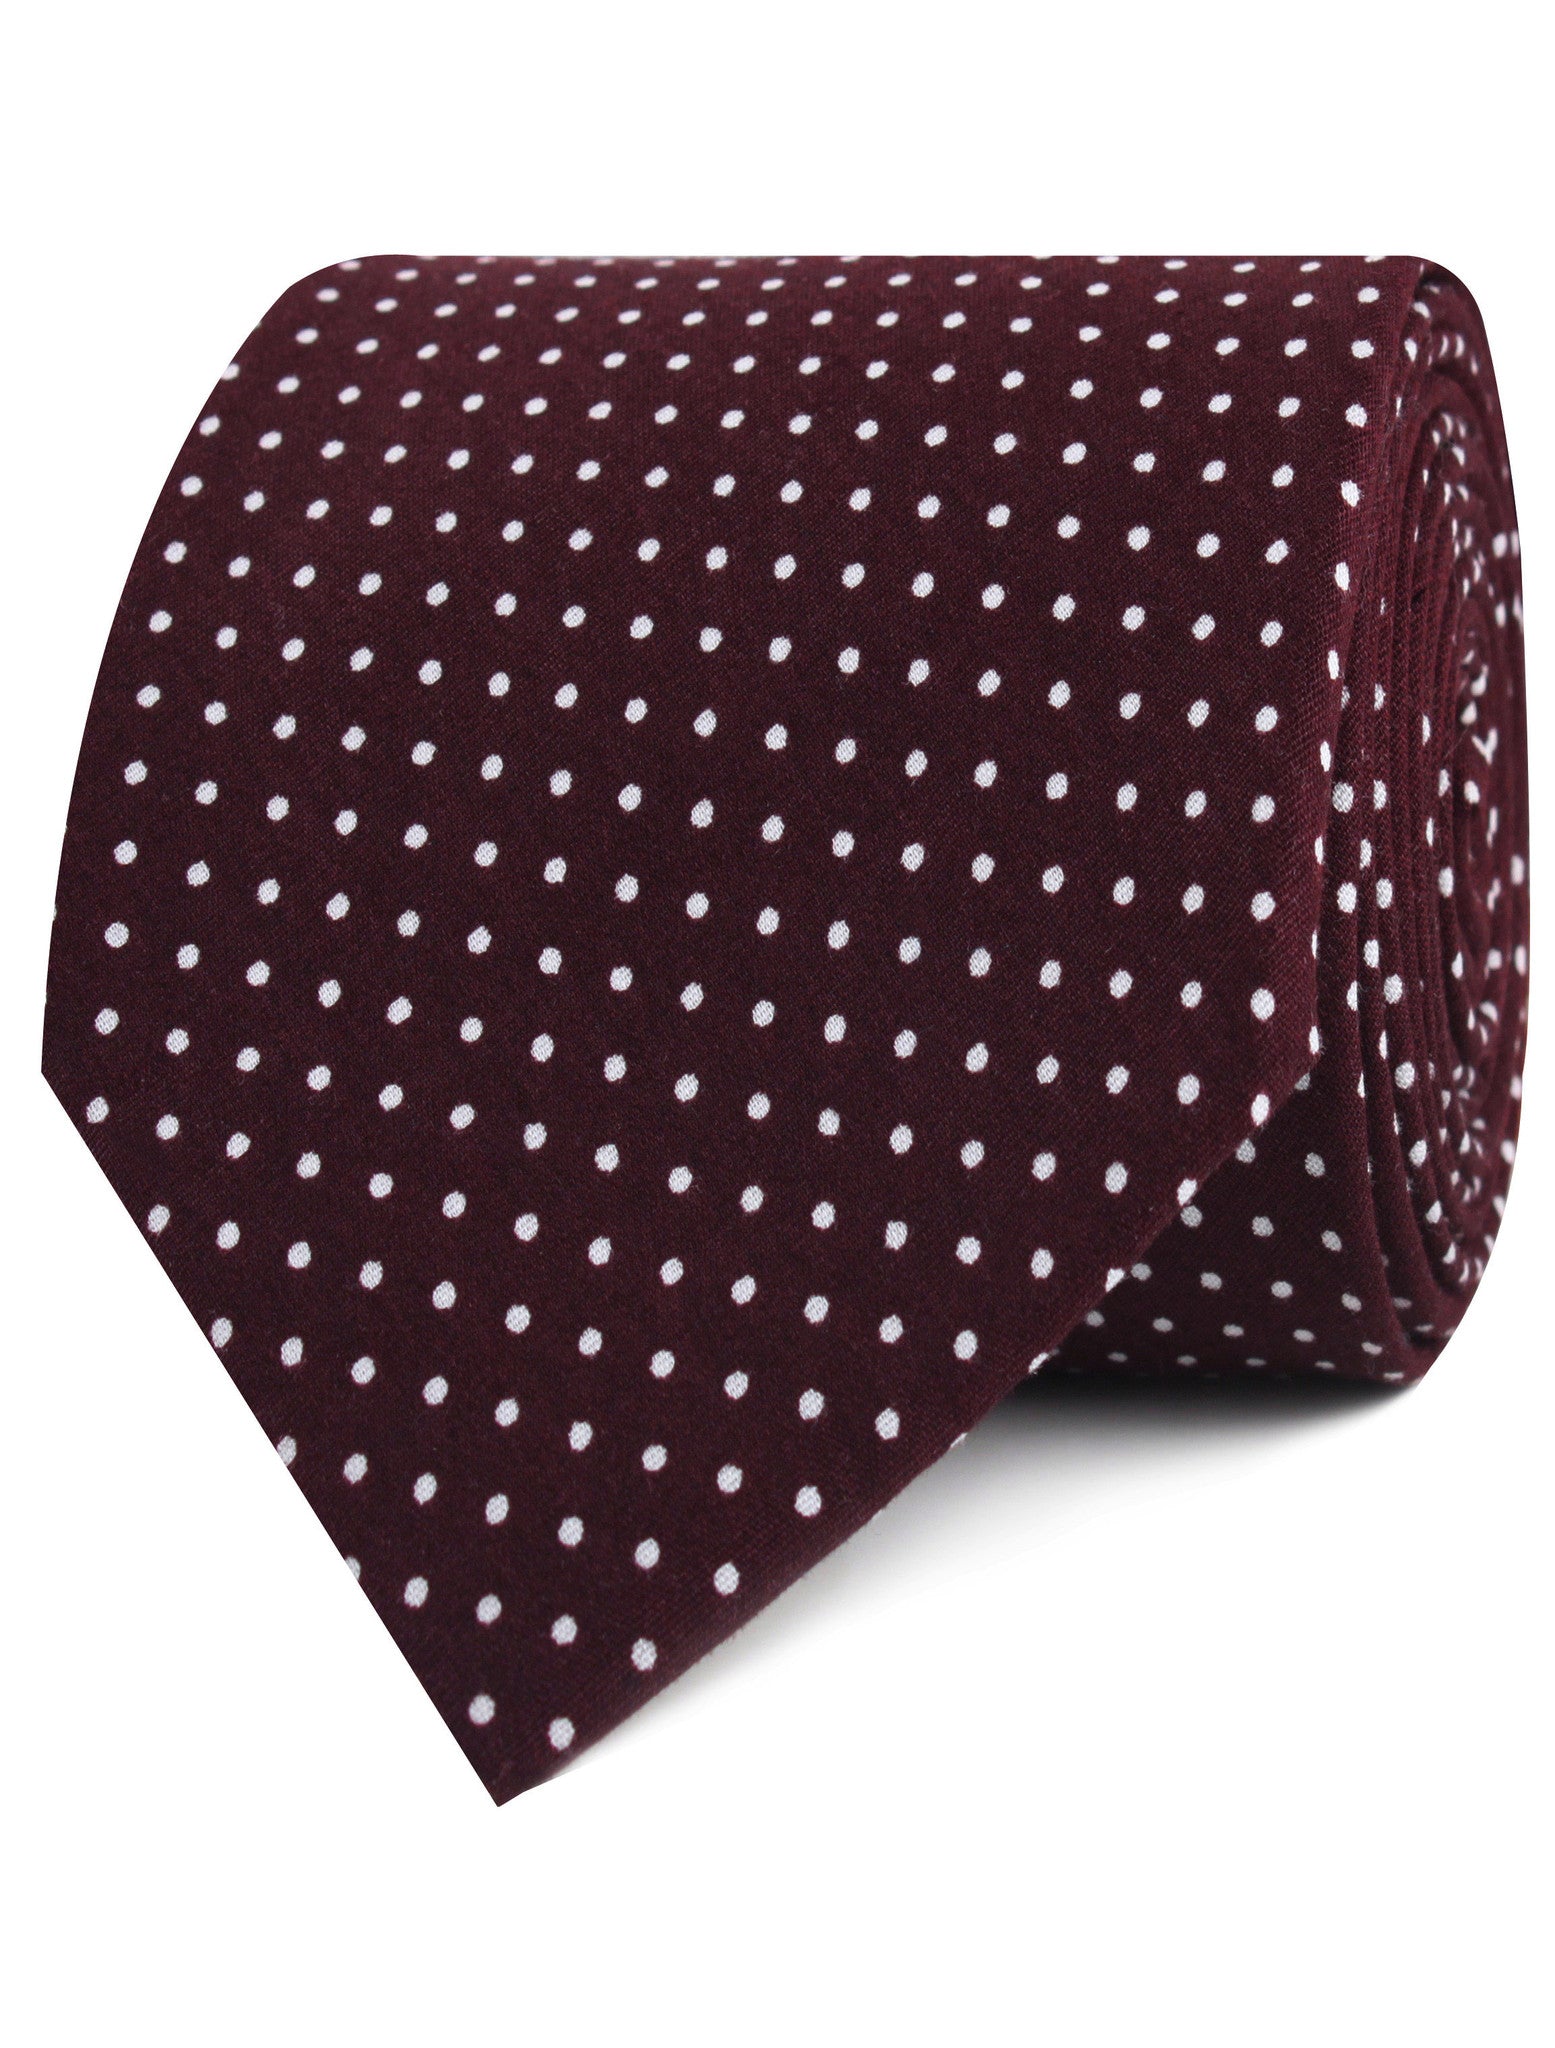 Burgundy Cotton Polkadot Tie | Mens Red Ties | Business Formal Necktie ...